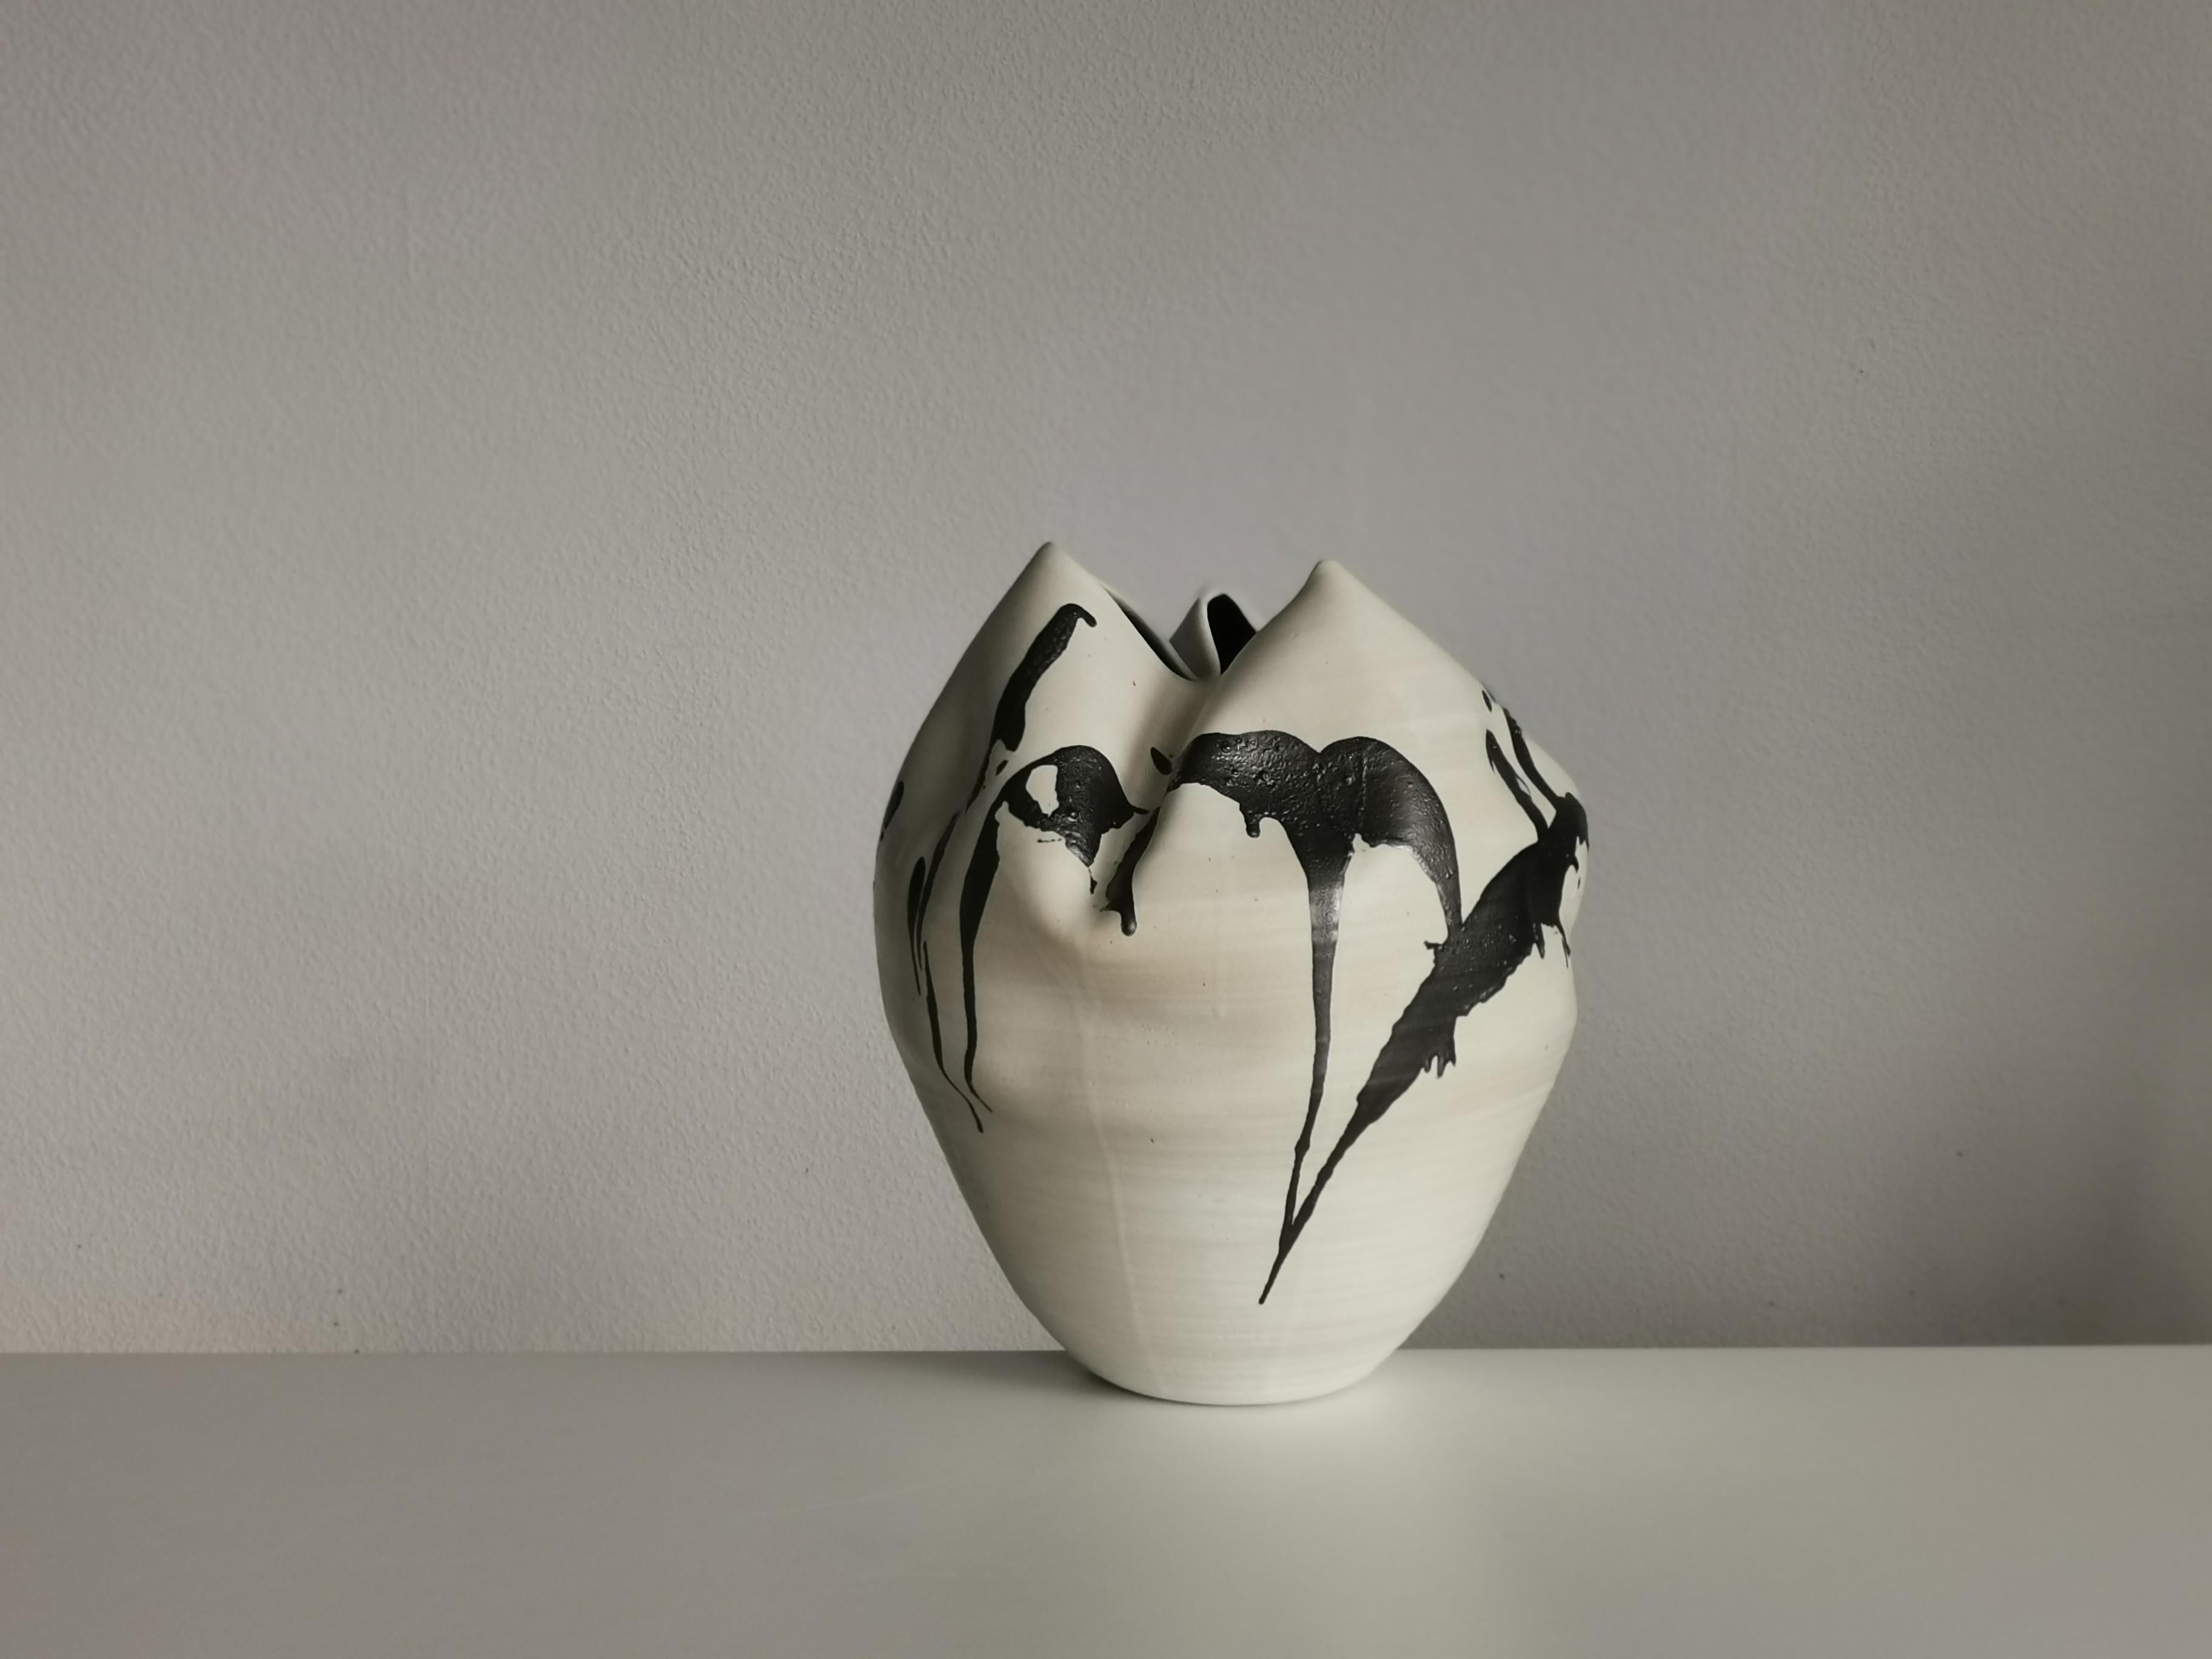 Spanish White Undulating Form Expressive Markings, Unique Ceramic Sculpture Vessel N.79